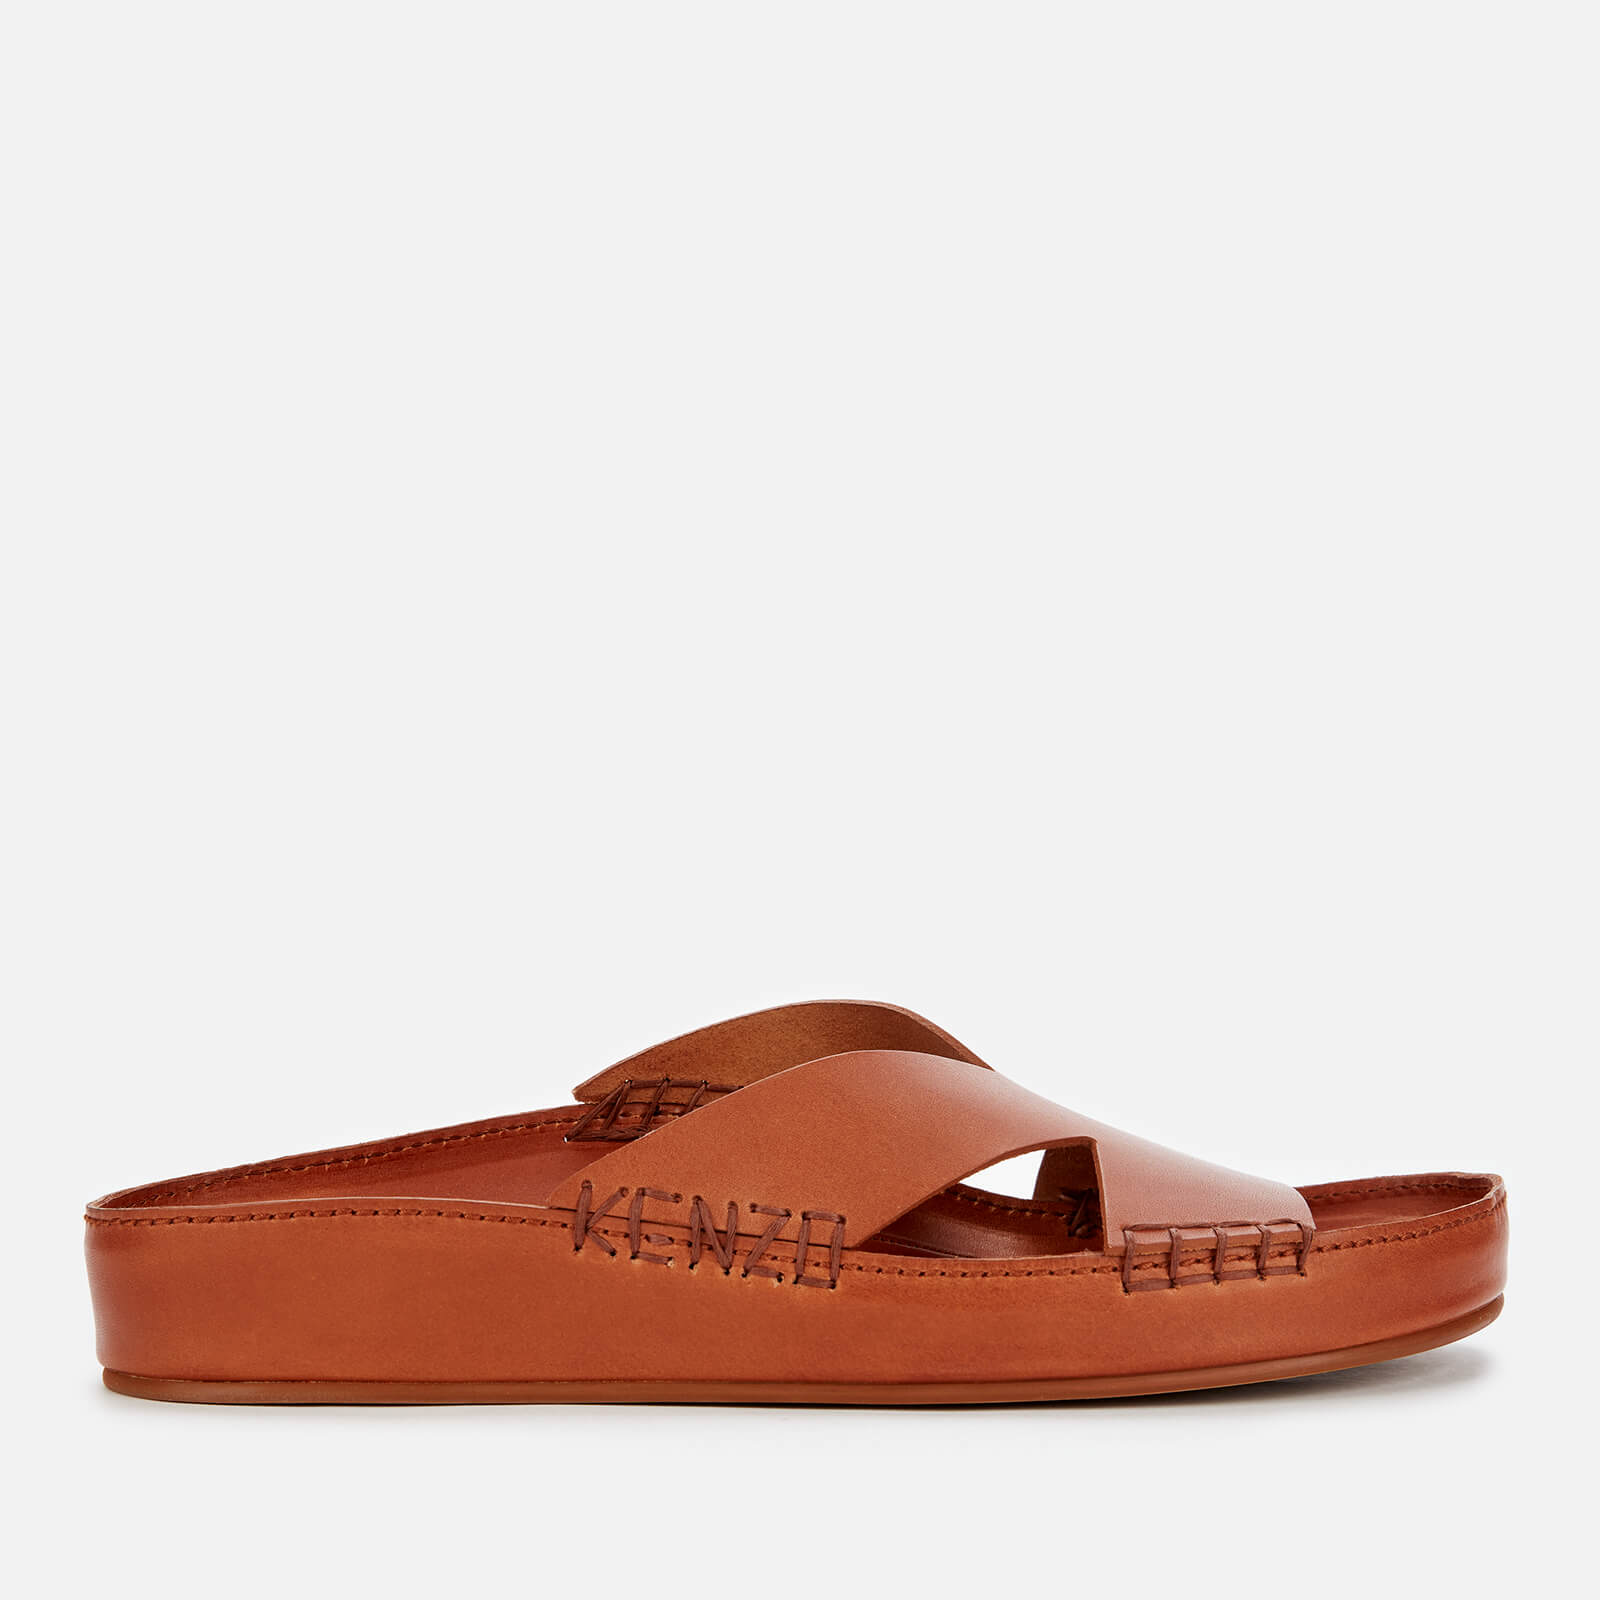 KENZO Men's Opanka Leather Mule Sandals - Dark Beige - UK 7